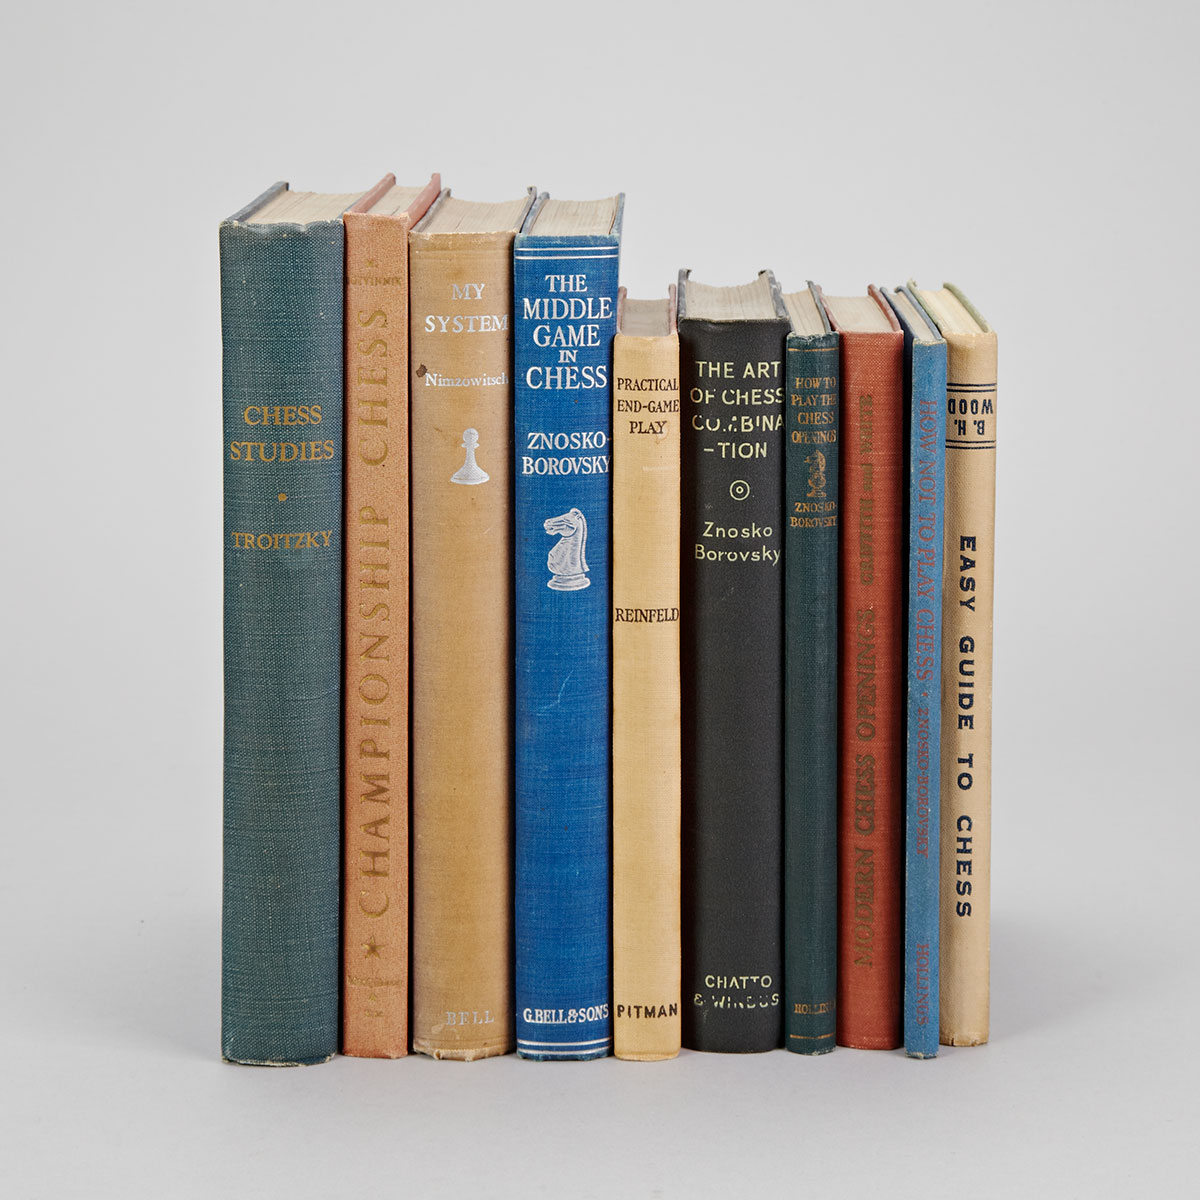 Ten mid 20th century Volumes on Chess Theory